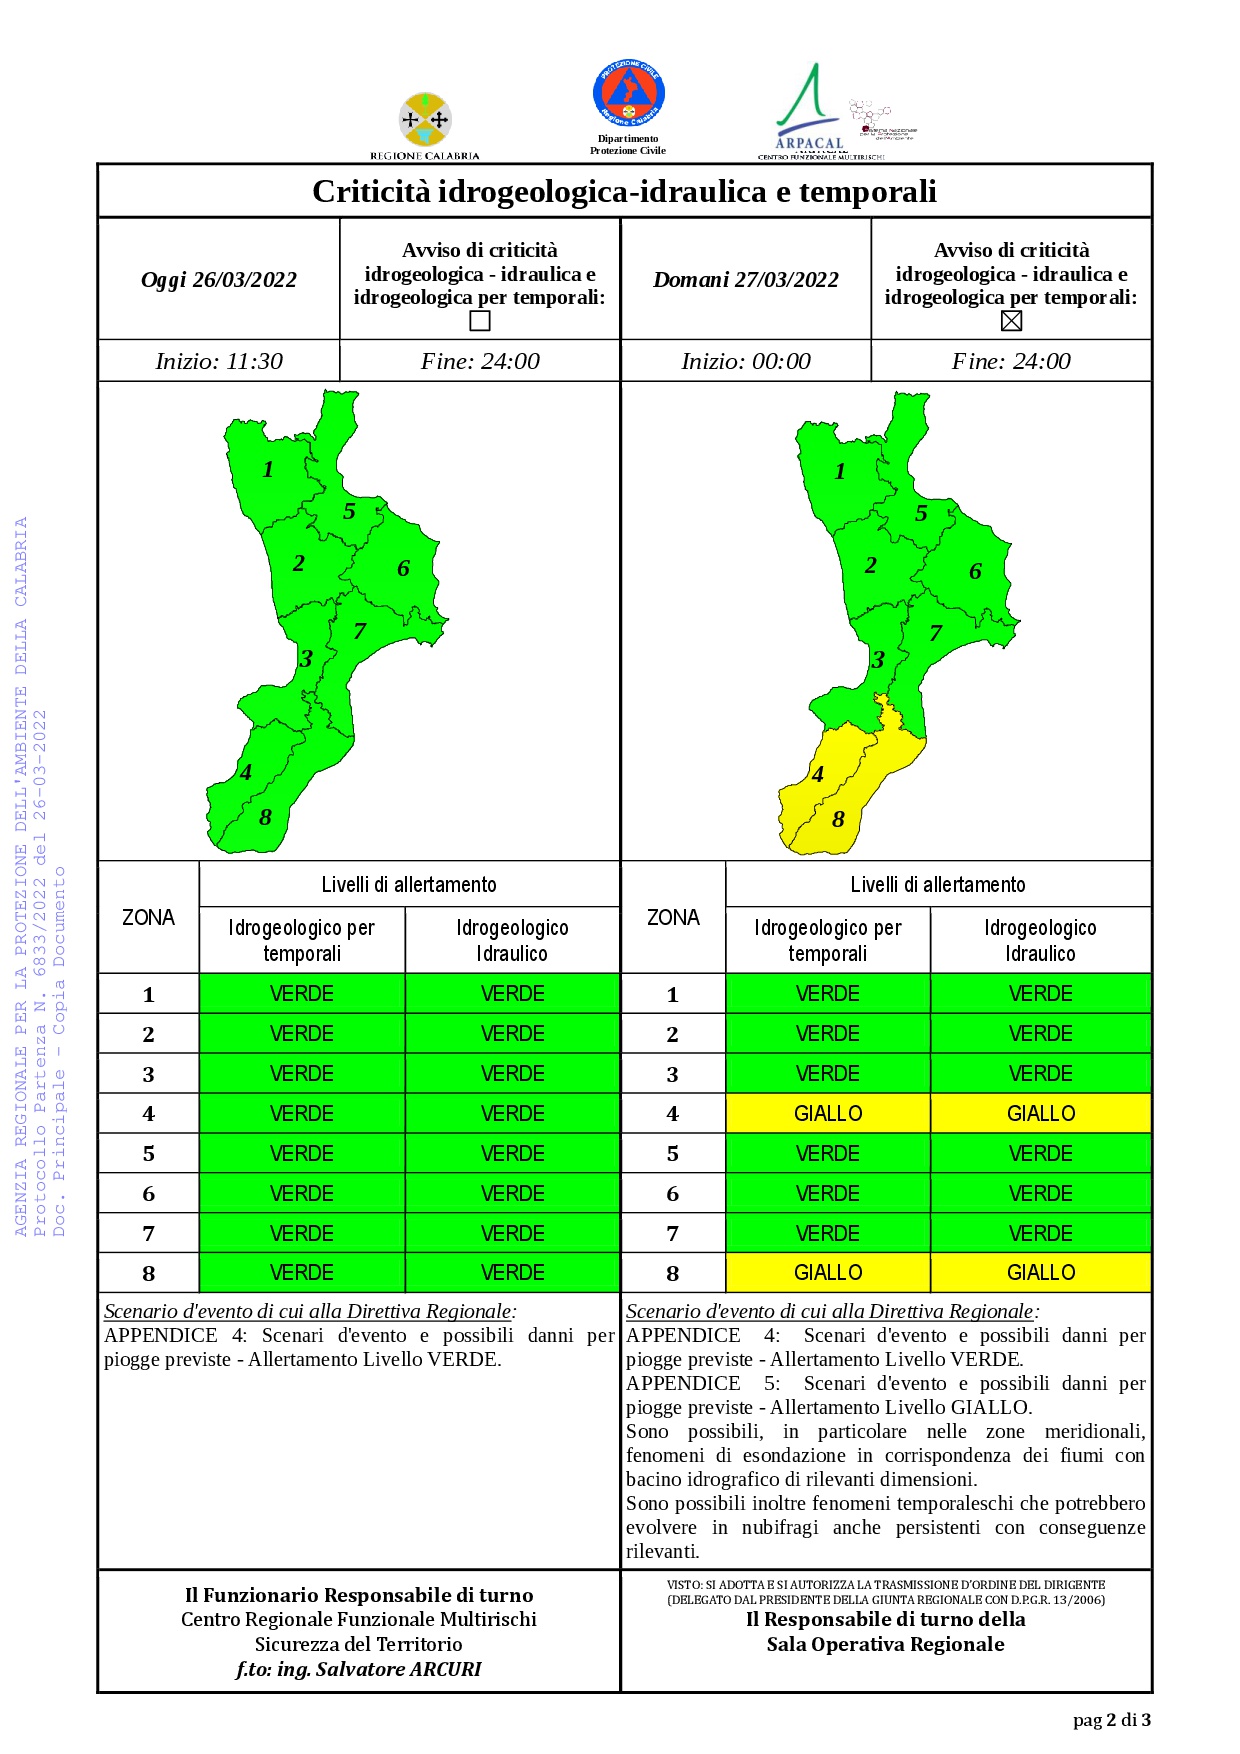 Criticità idrogeologica-idraulica e temporali in Calabria 26-03-2022